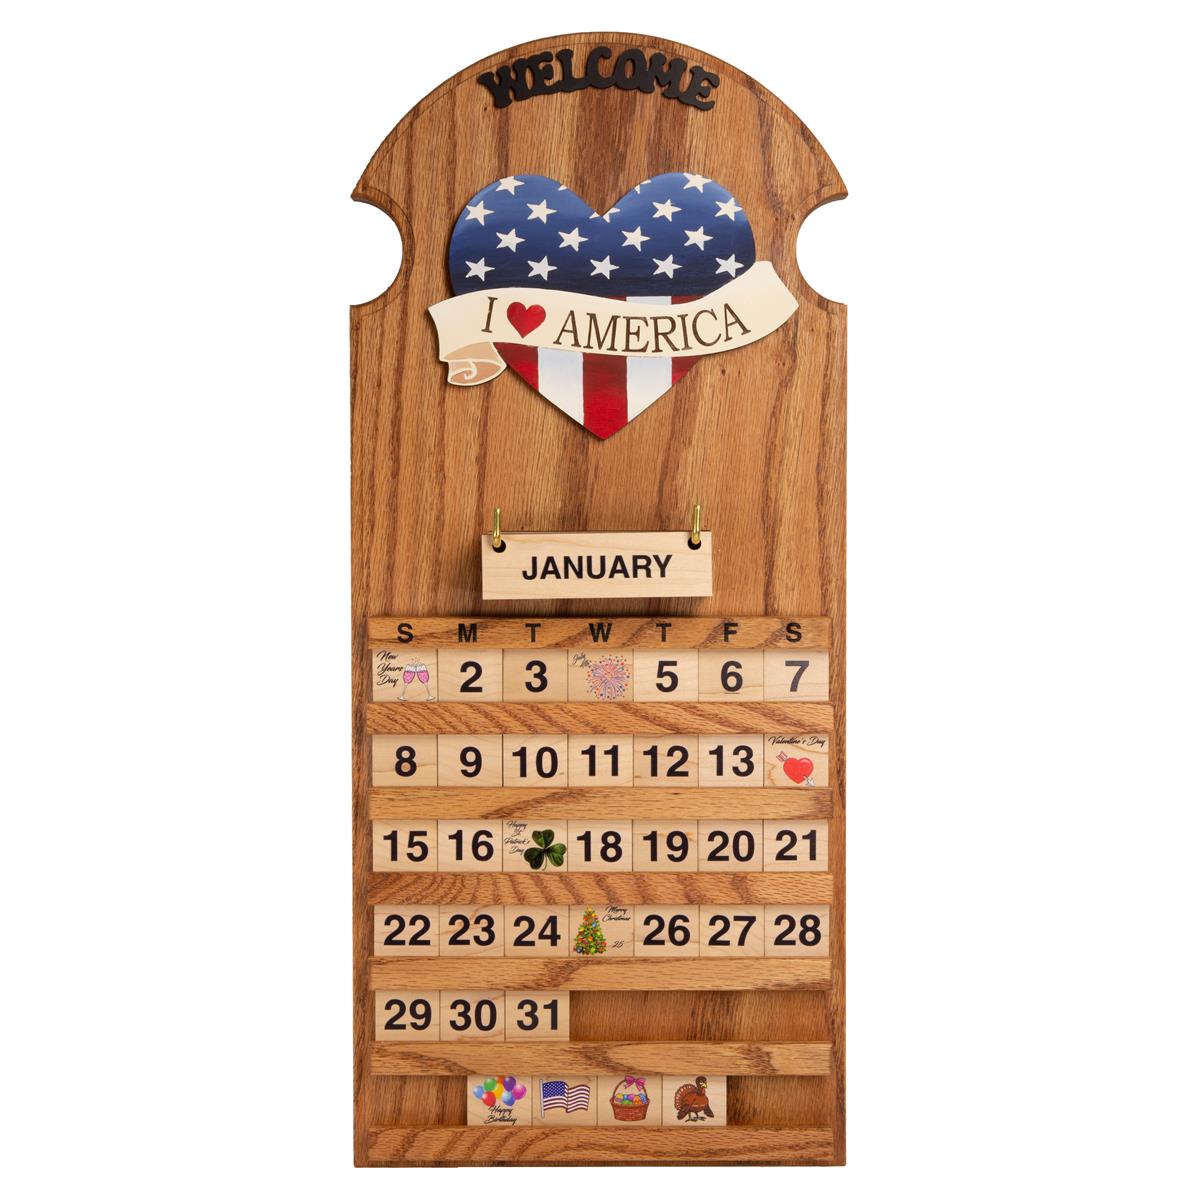 Wooden Perpetual Calendar